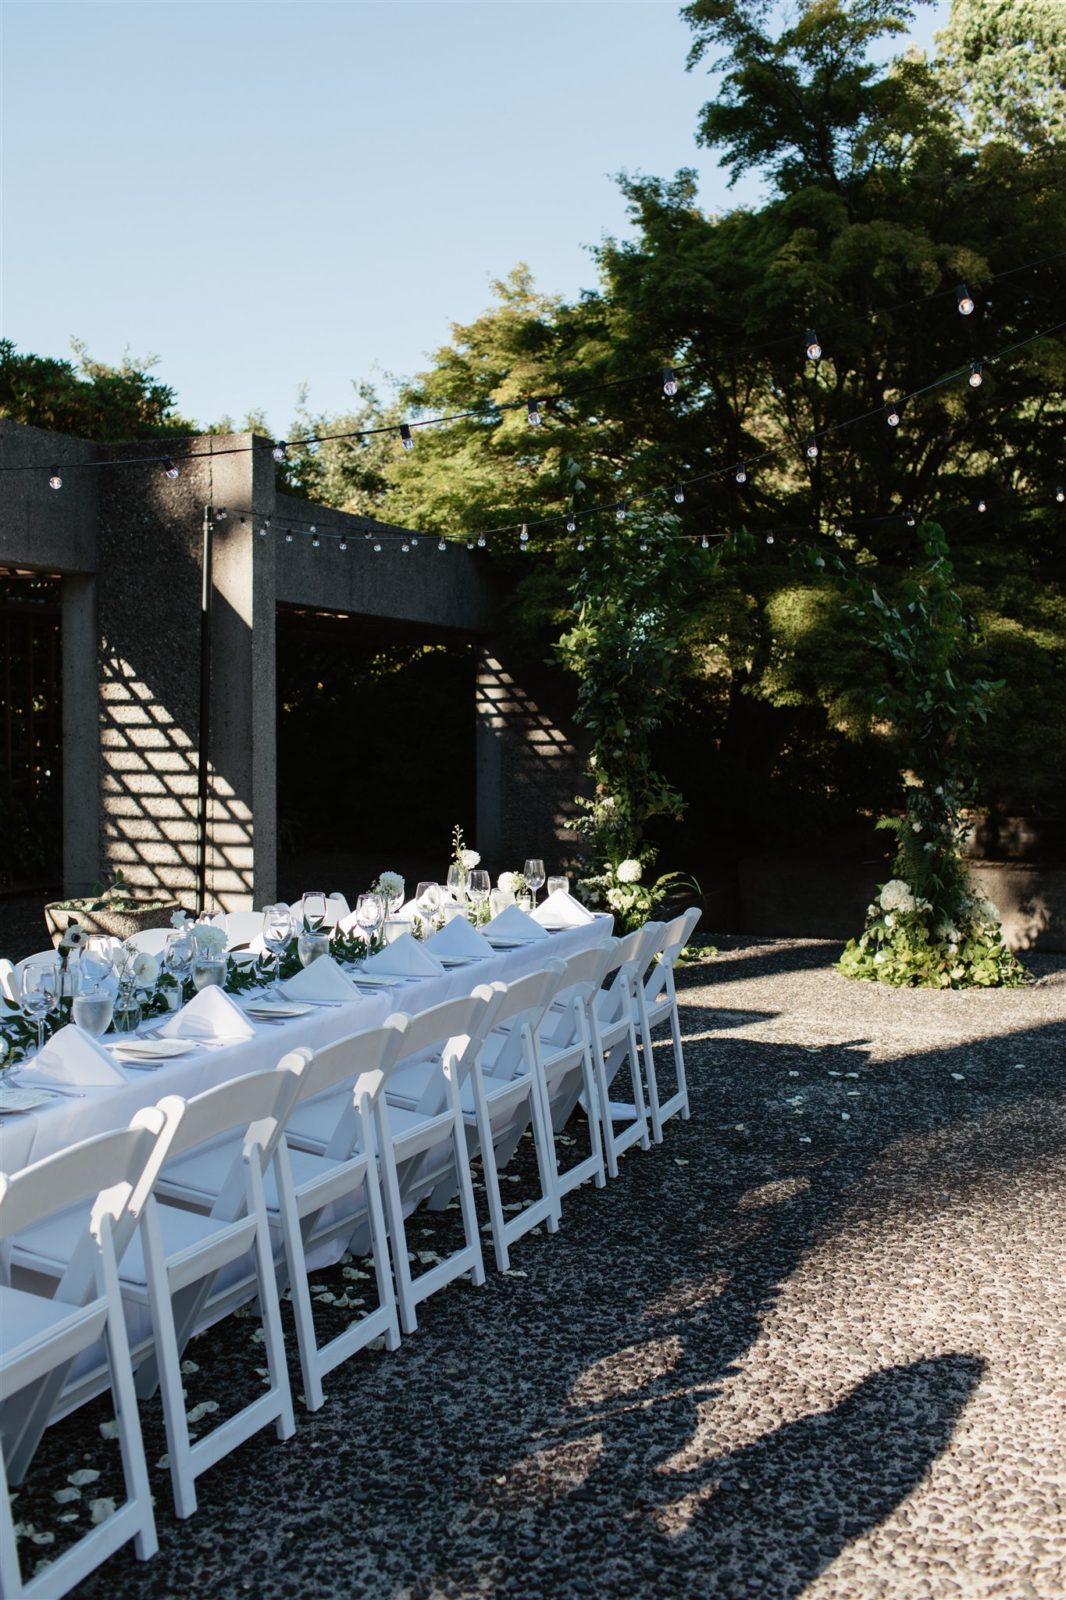 Alfresco dining, outdoor wedding reception, outdoor ceremony inspiration, outdoor dinner